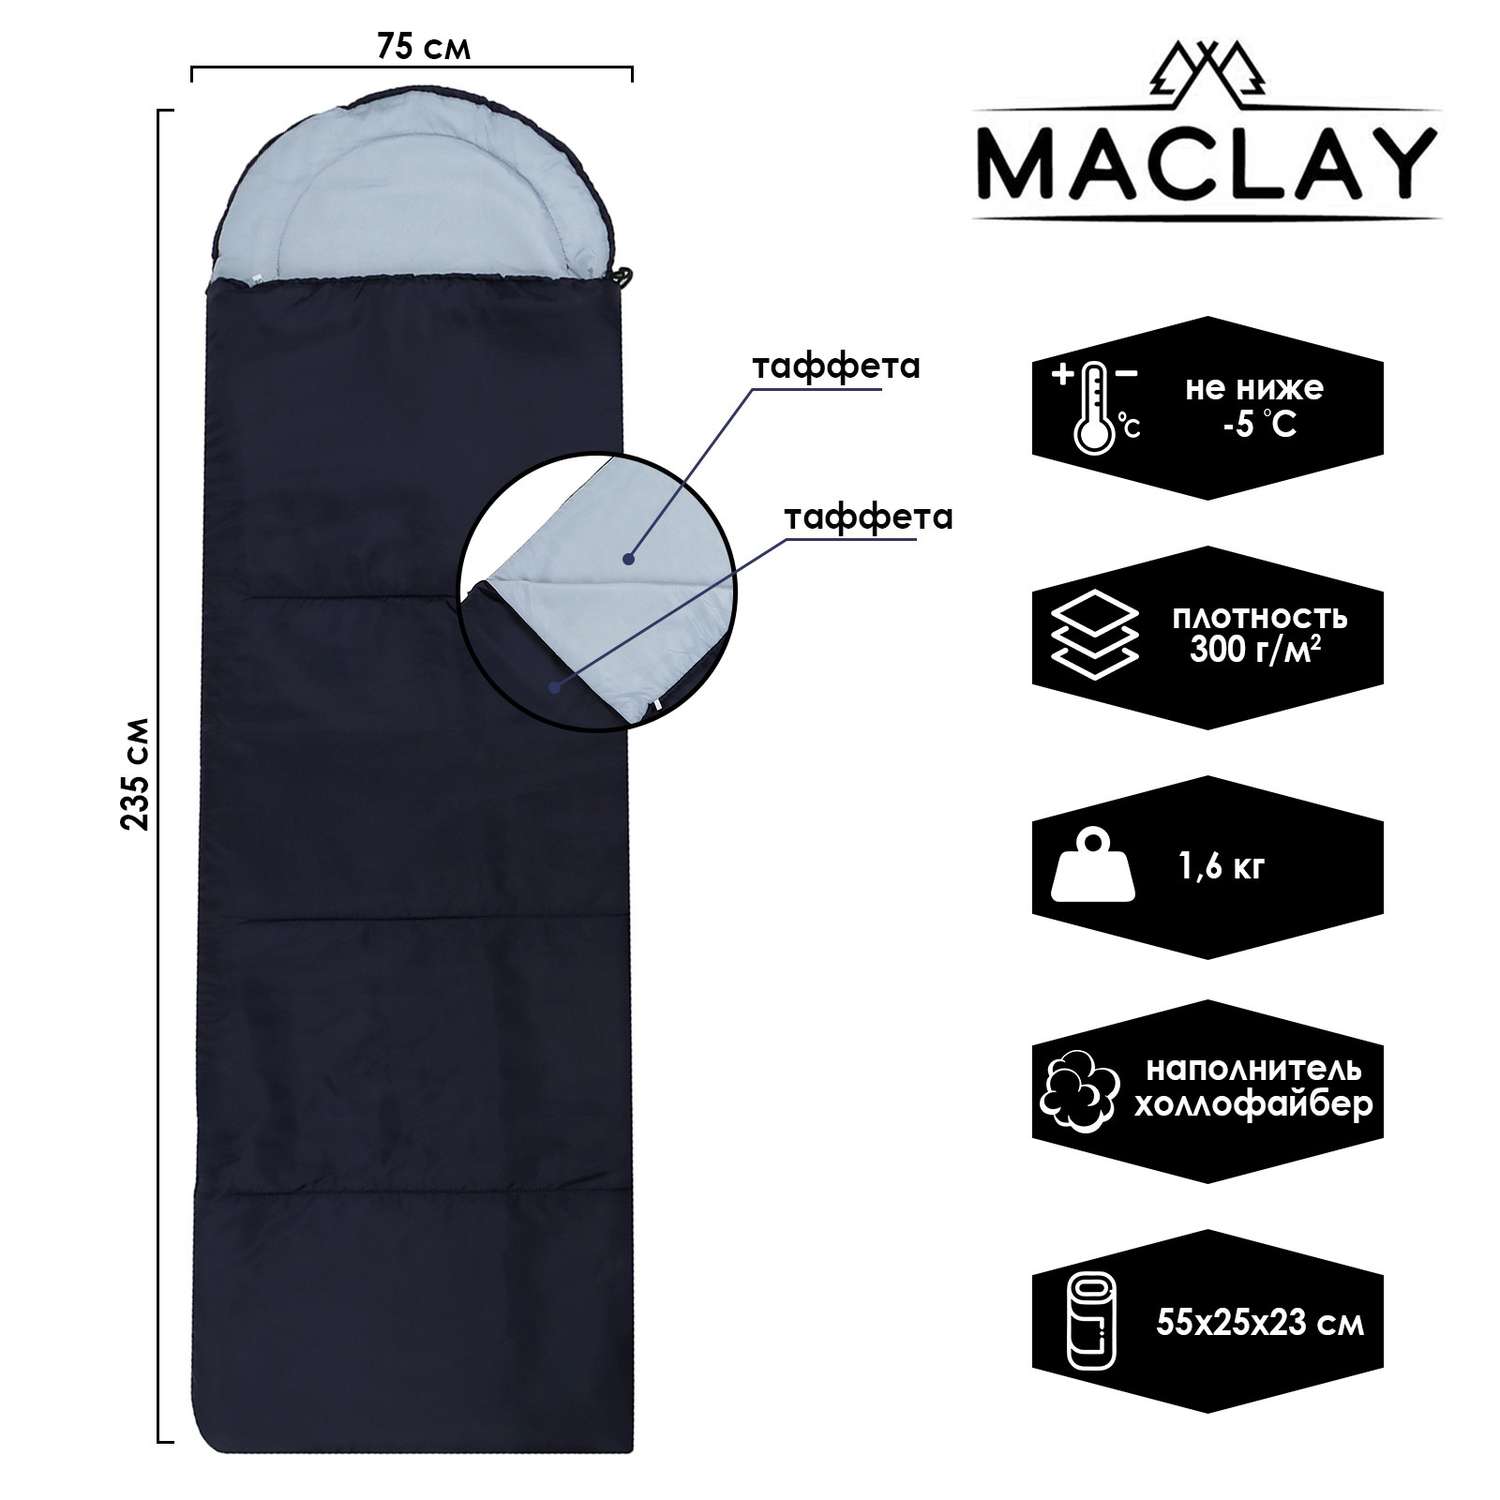 Спальник-одеяло Maclay с подголовником 235х75 см до -5°С - фото 1